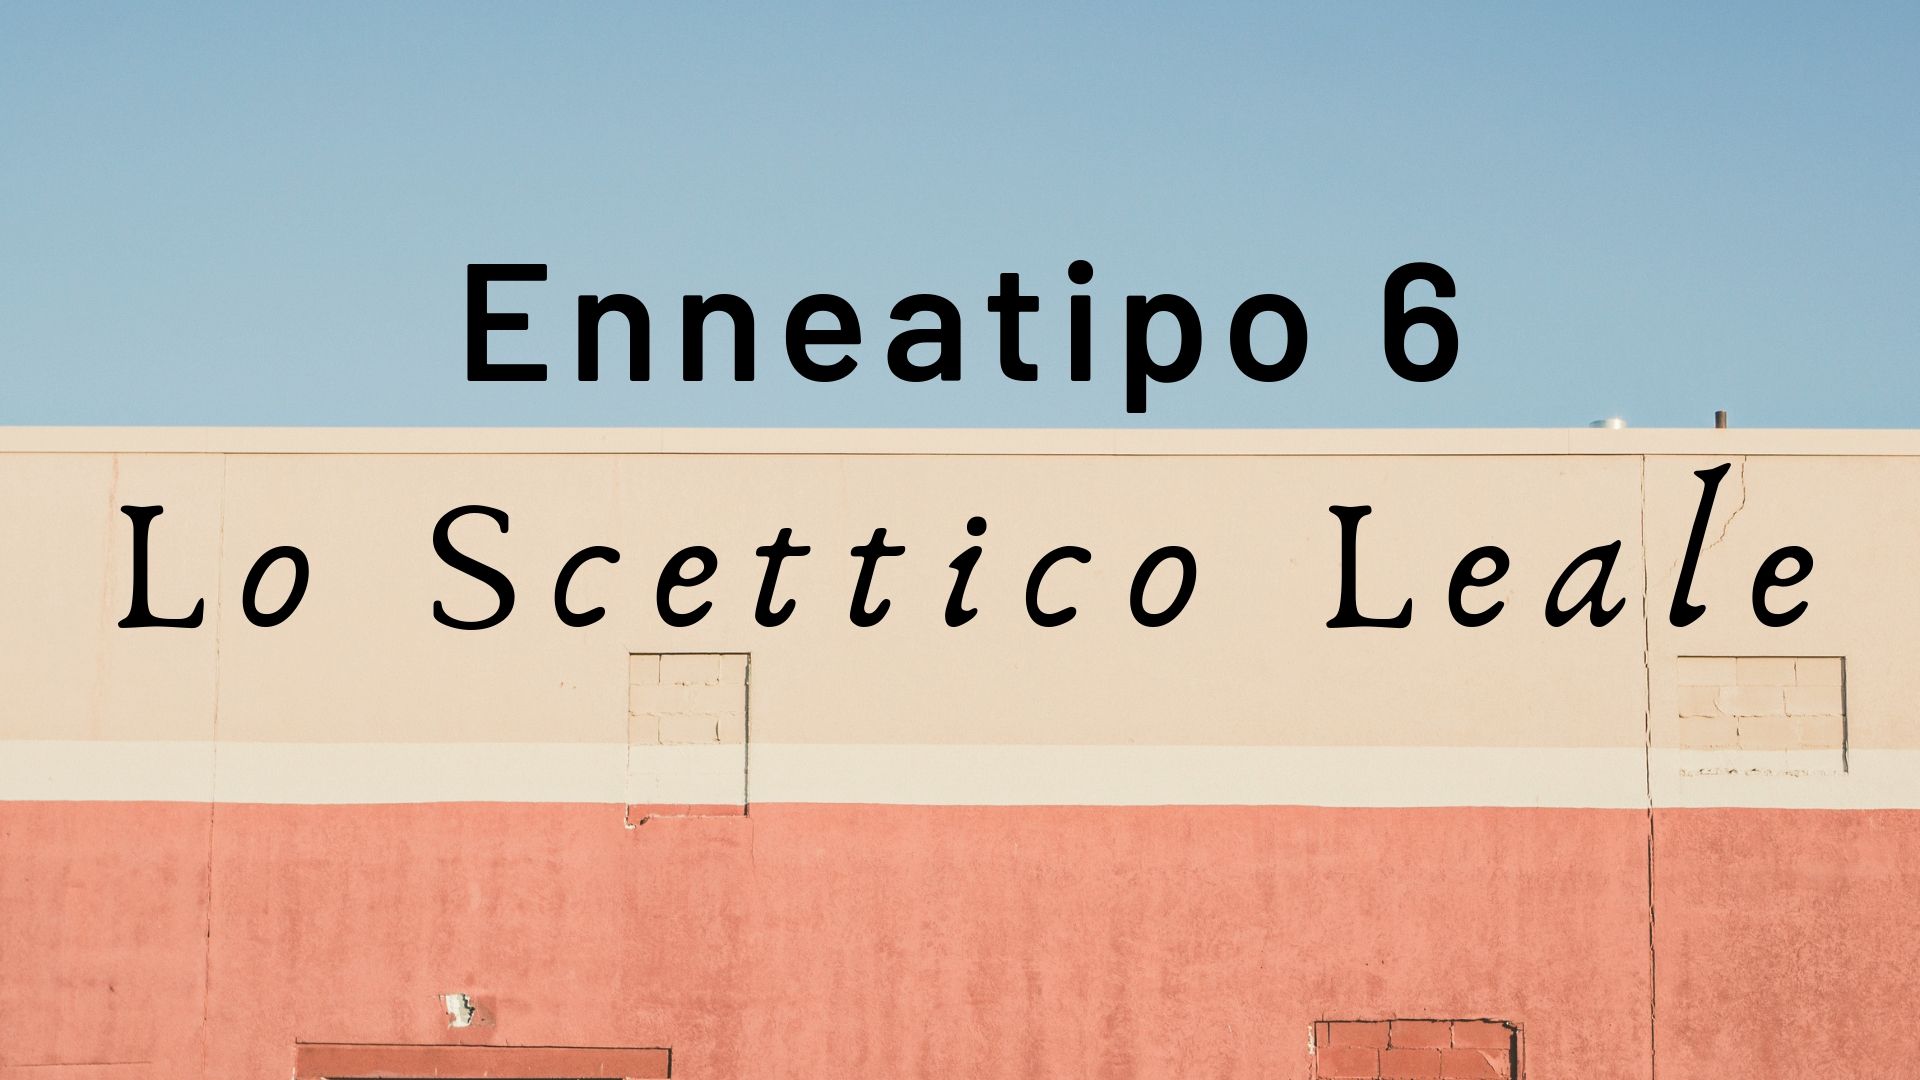 Enneatipo 6